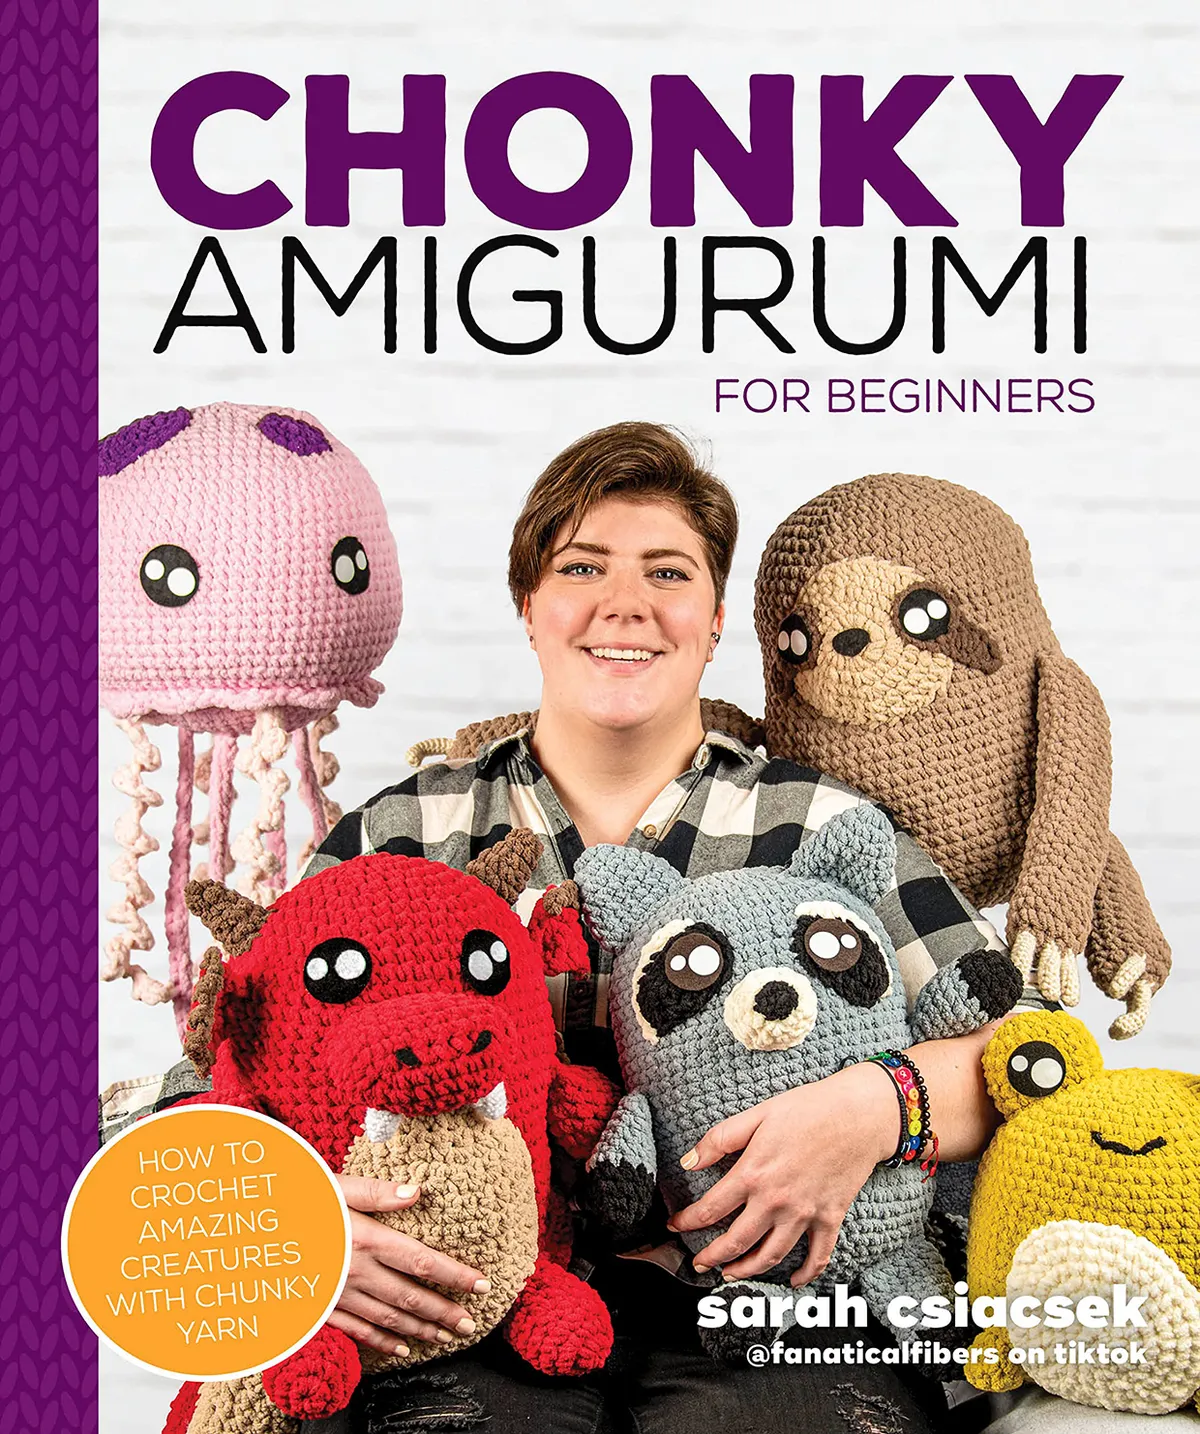 Chonky amigurumi for beginners